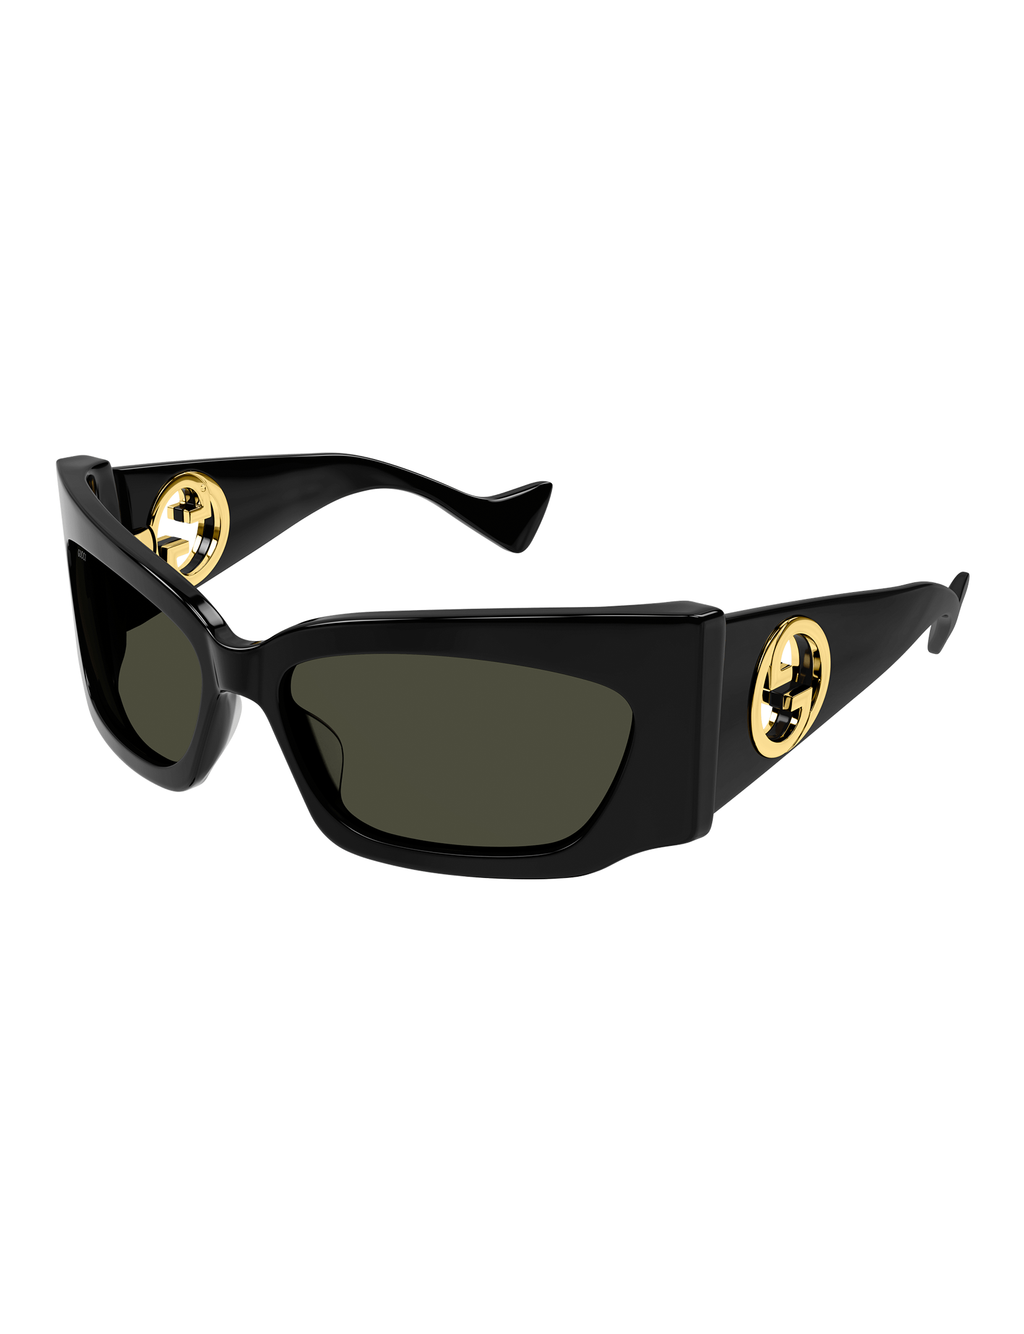 Prestige Sunglasses, Black/Grey